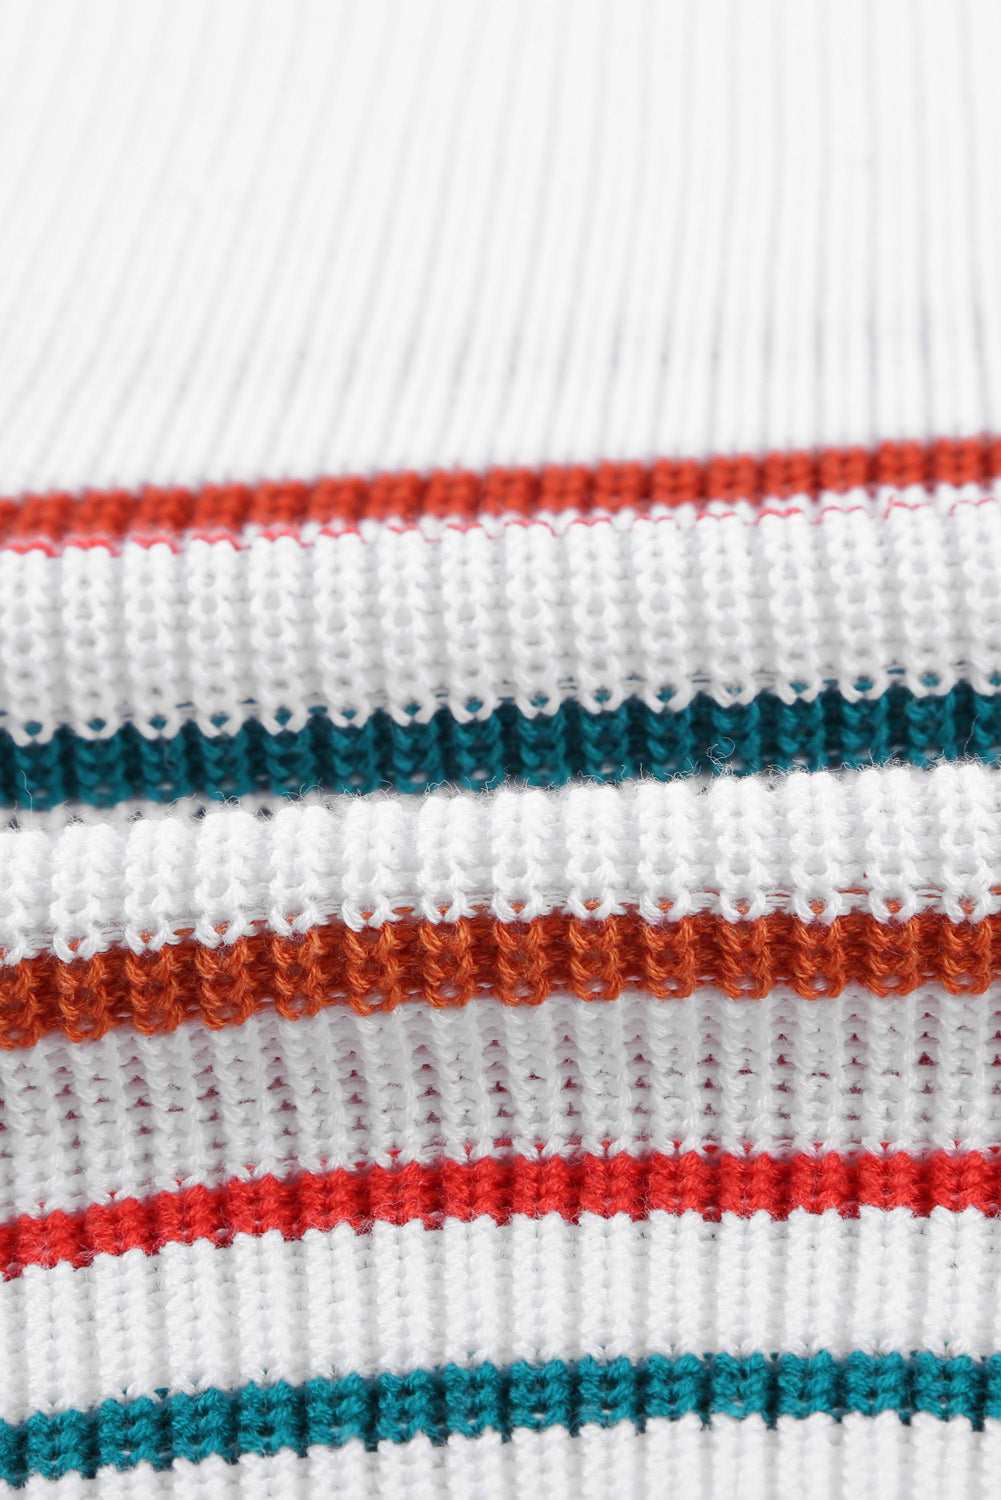 Multicolor Stripes Knit Tank Top